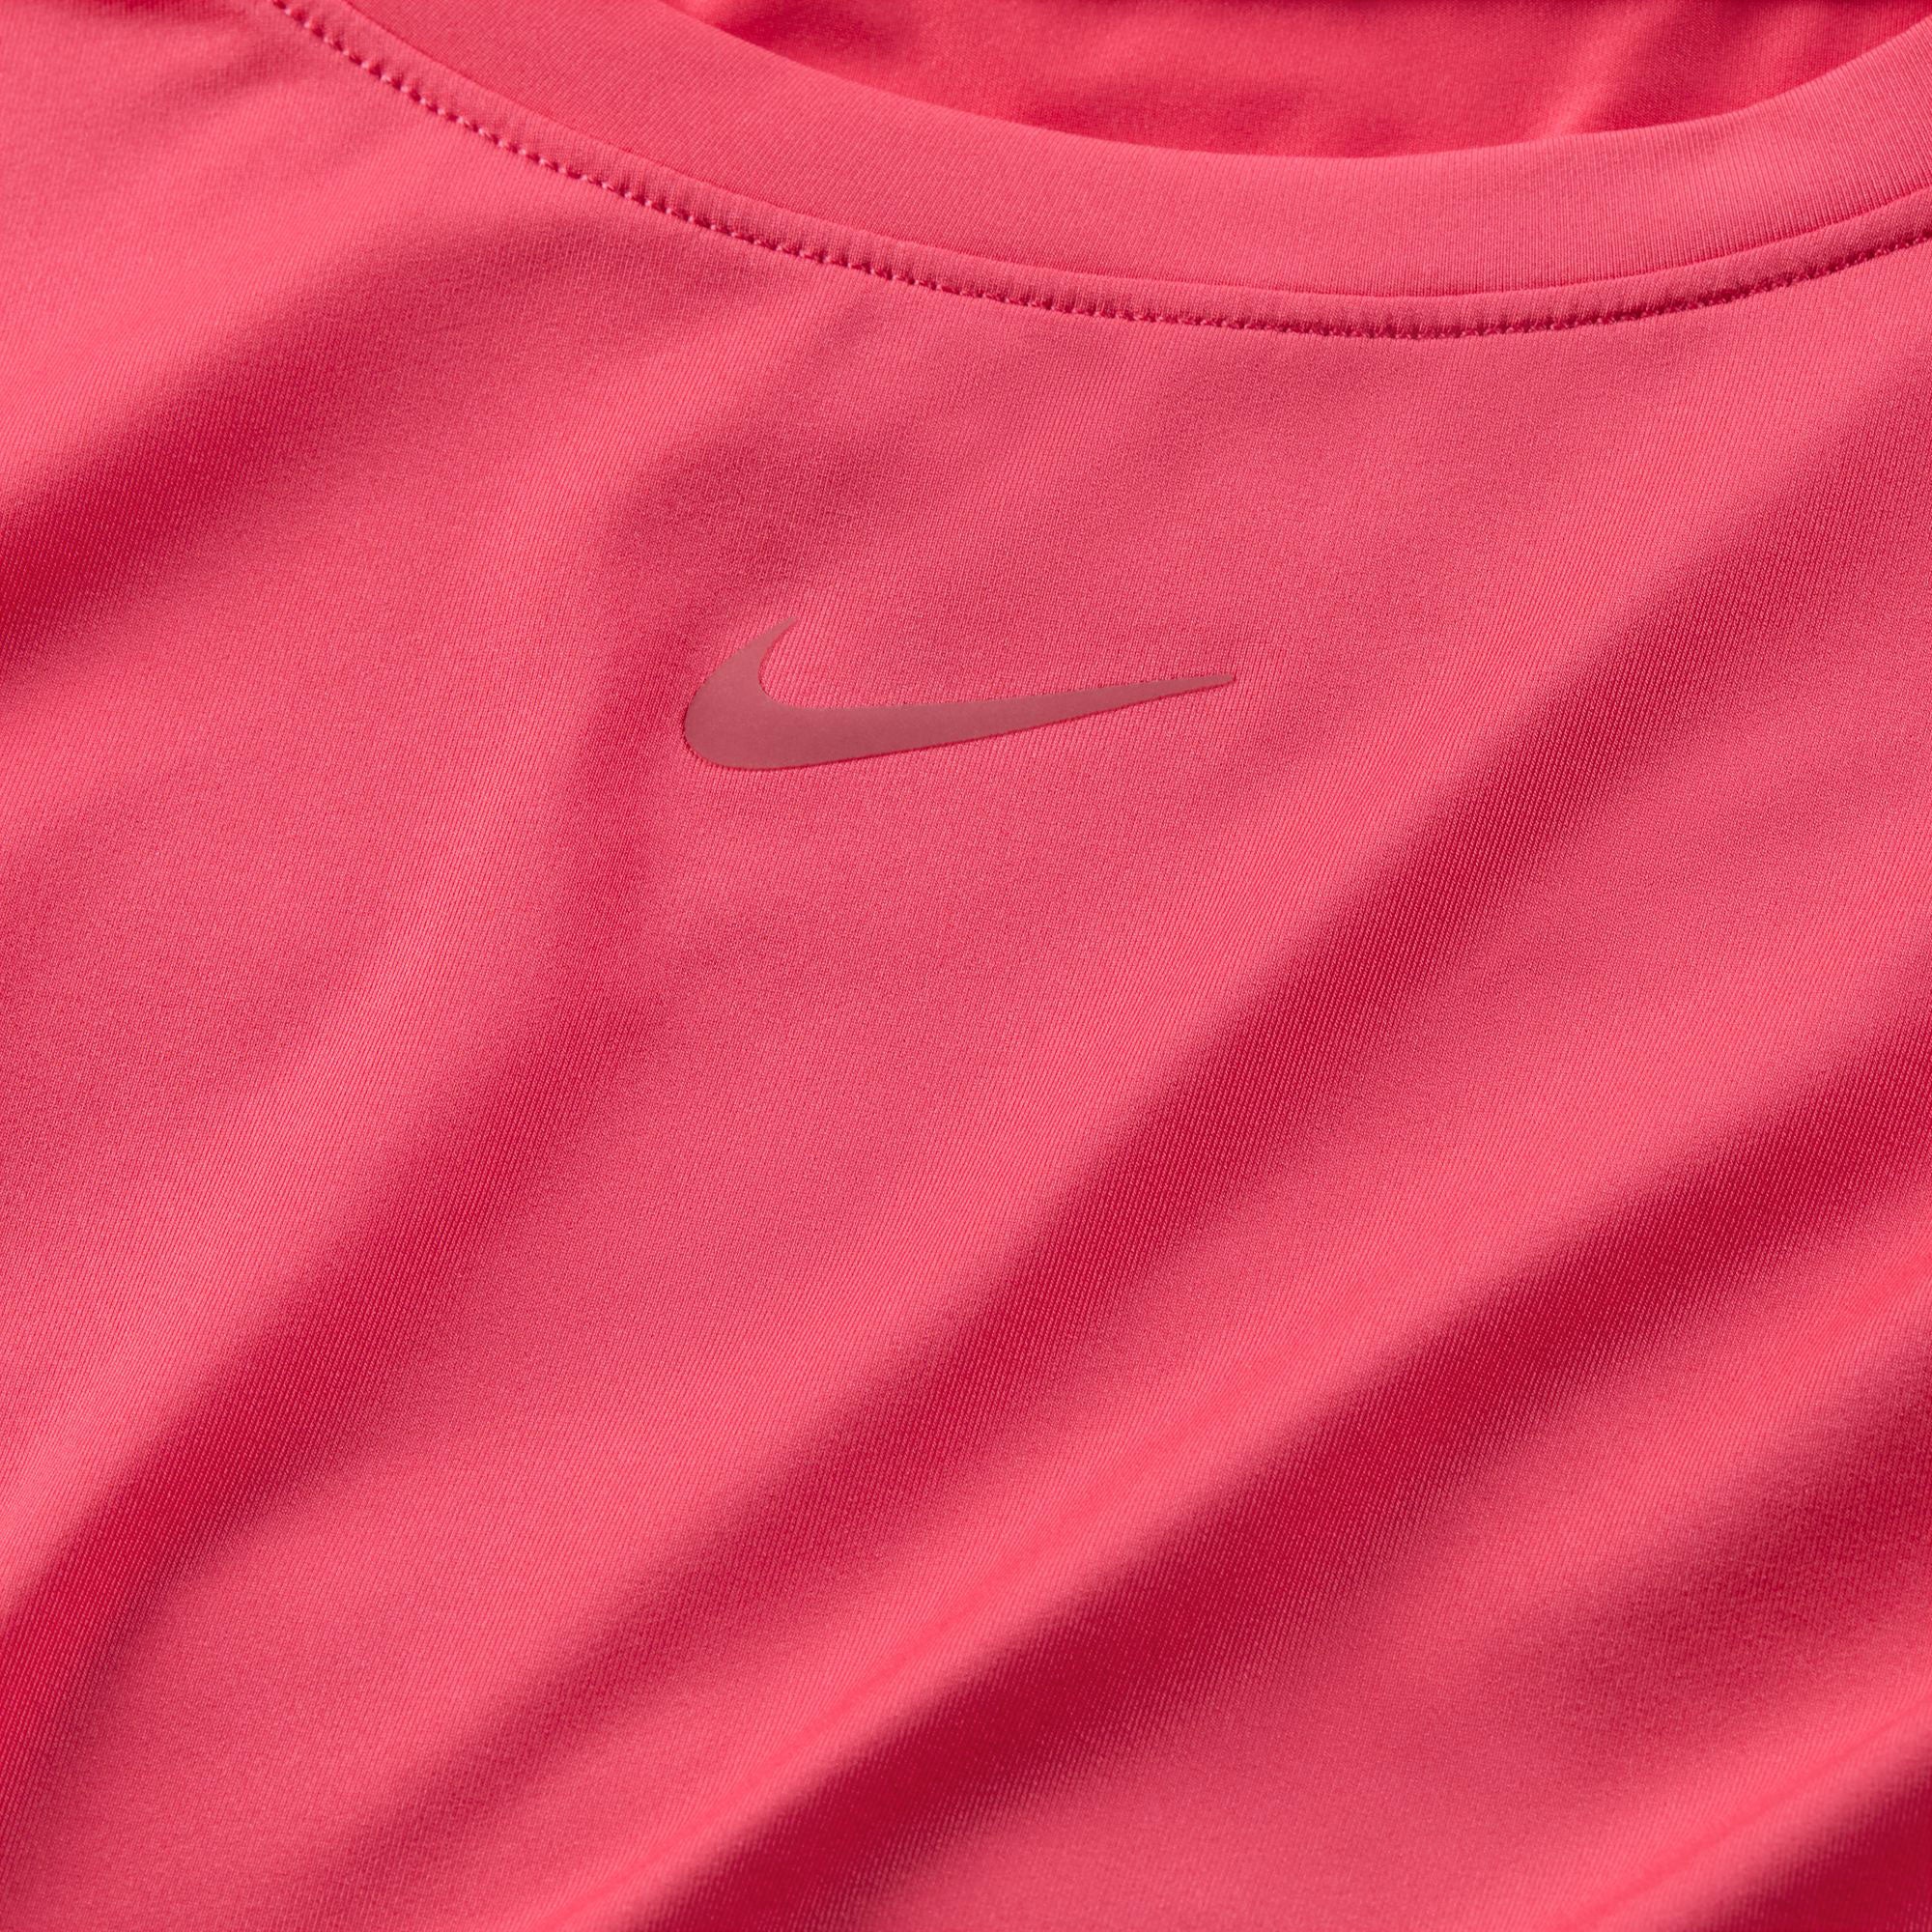 Nike One Classic Women's Dri-FIT Shirt - Pink (5)